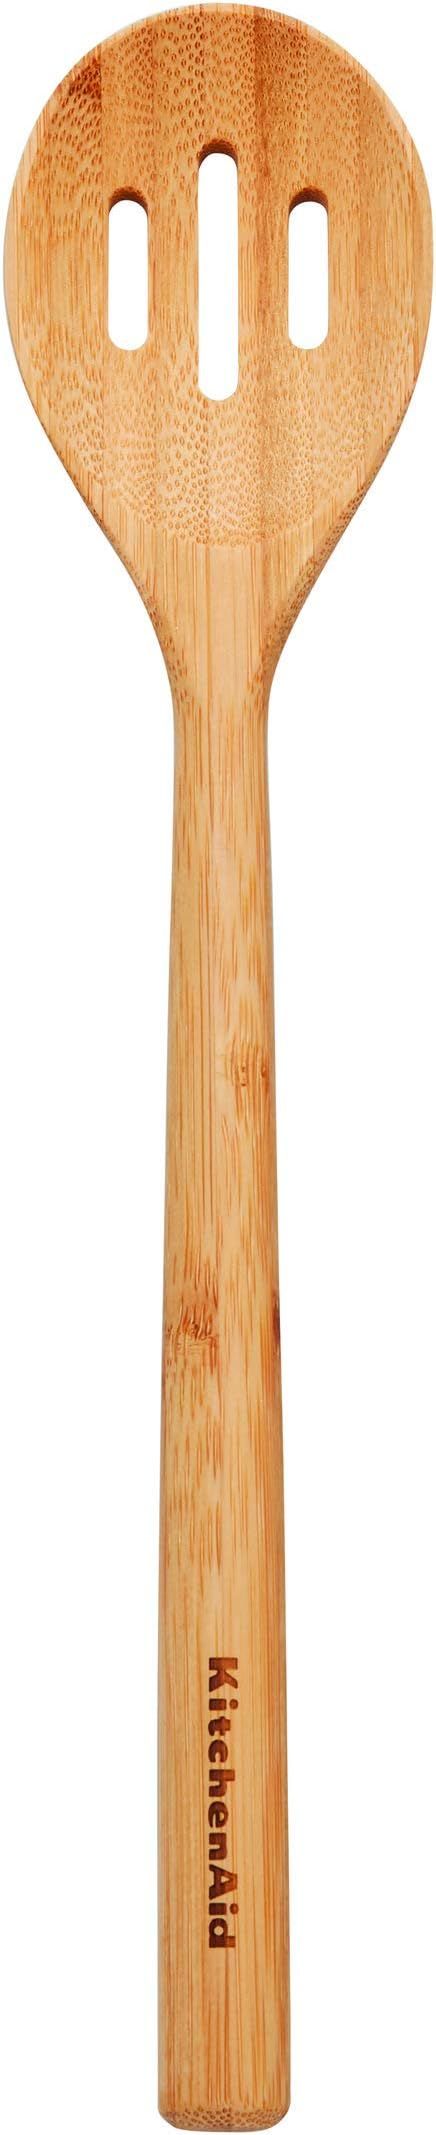 KitchenAid Universal Bamboo Slotted Spoon, 12-Inch | Amazon (US)